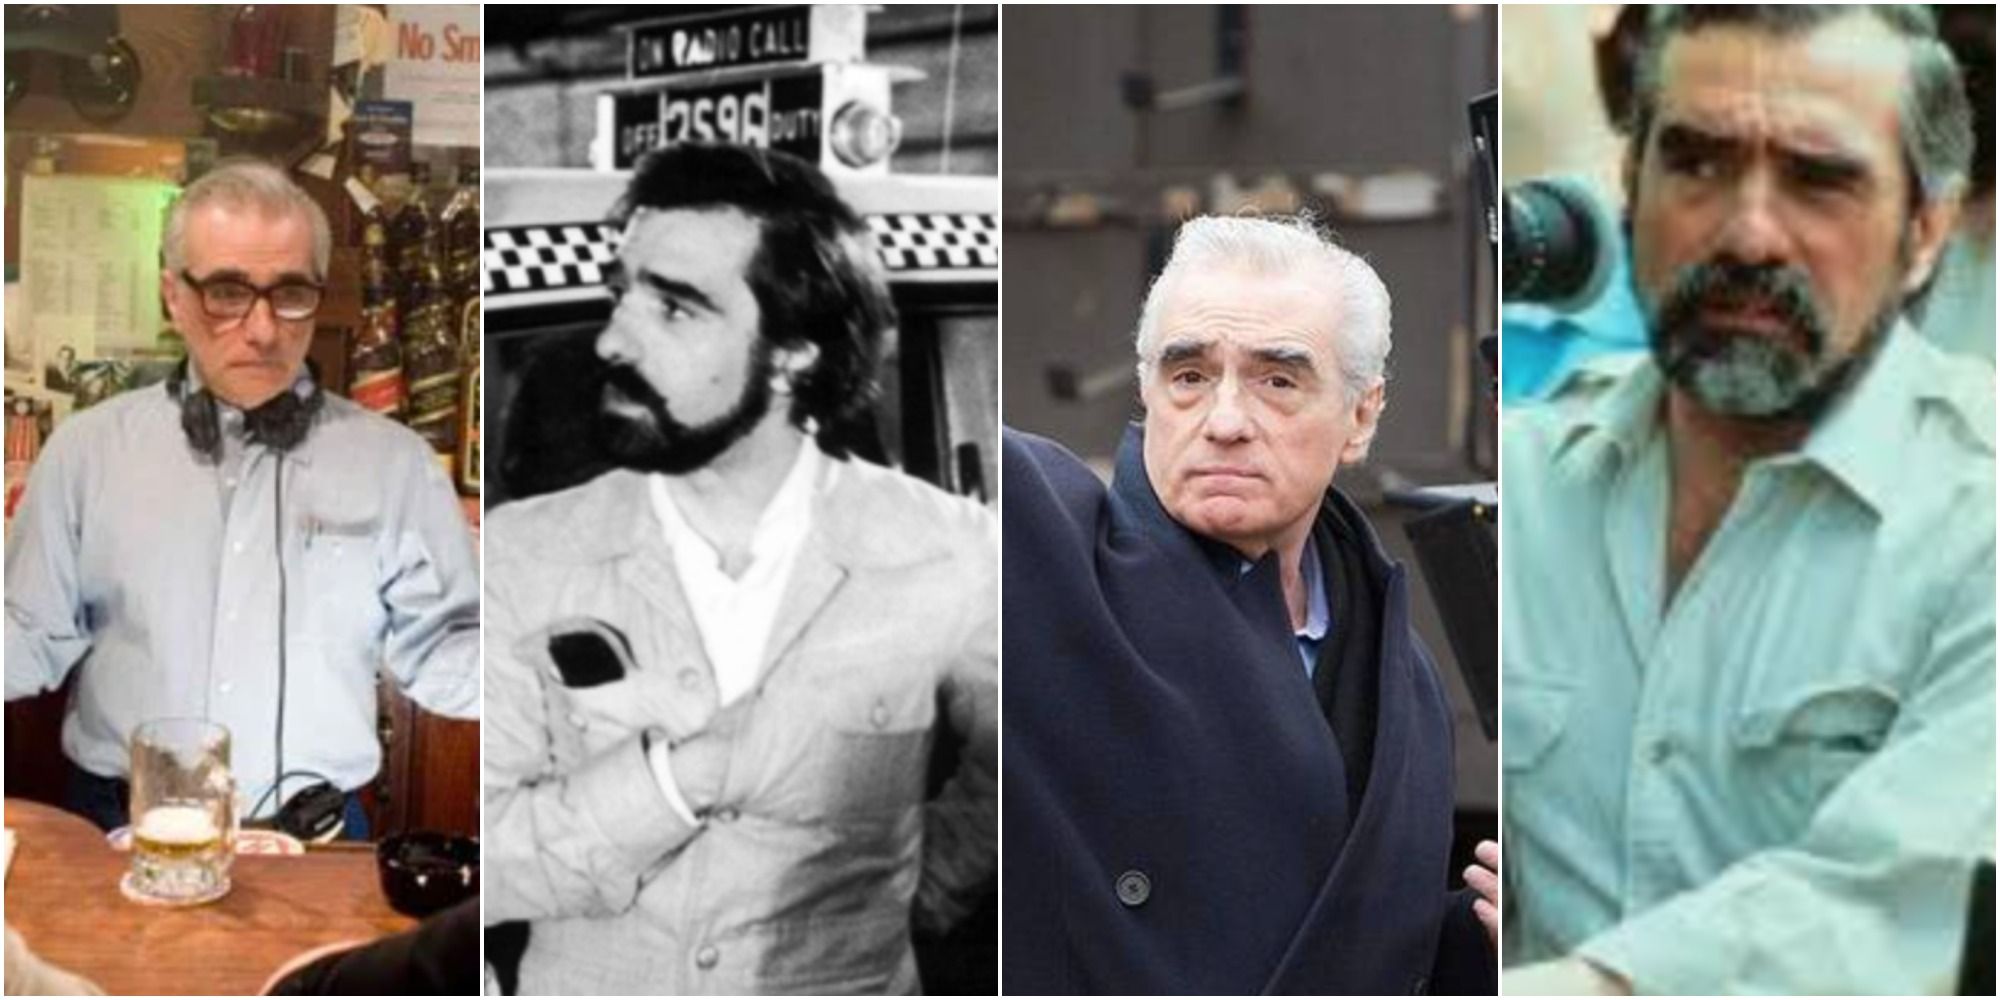 4 image collage of Scorsese on set